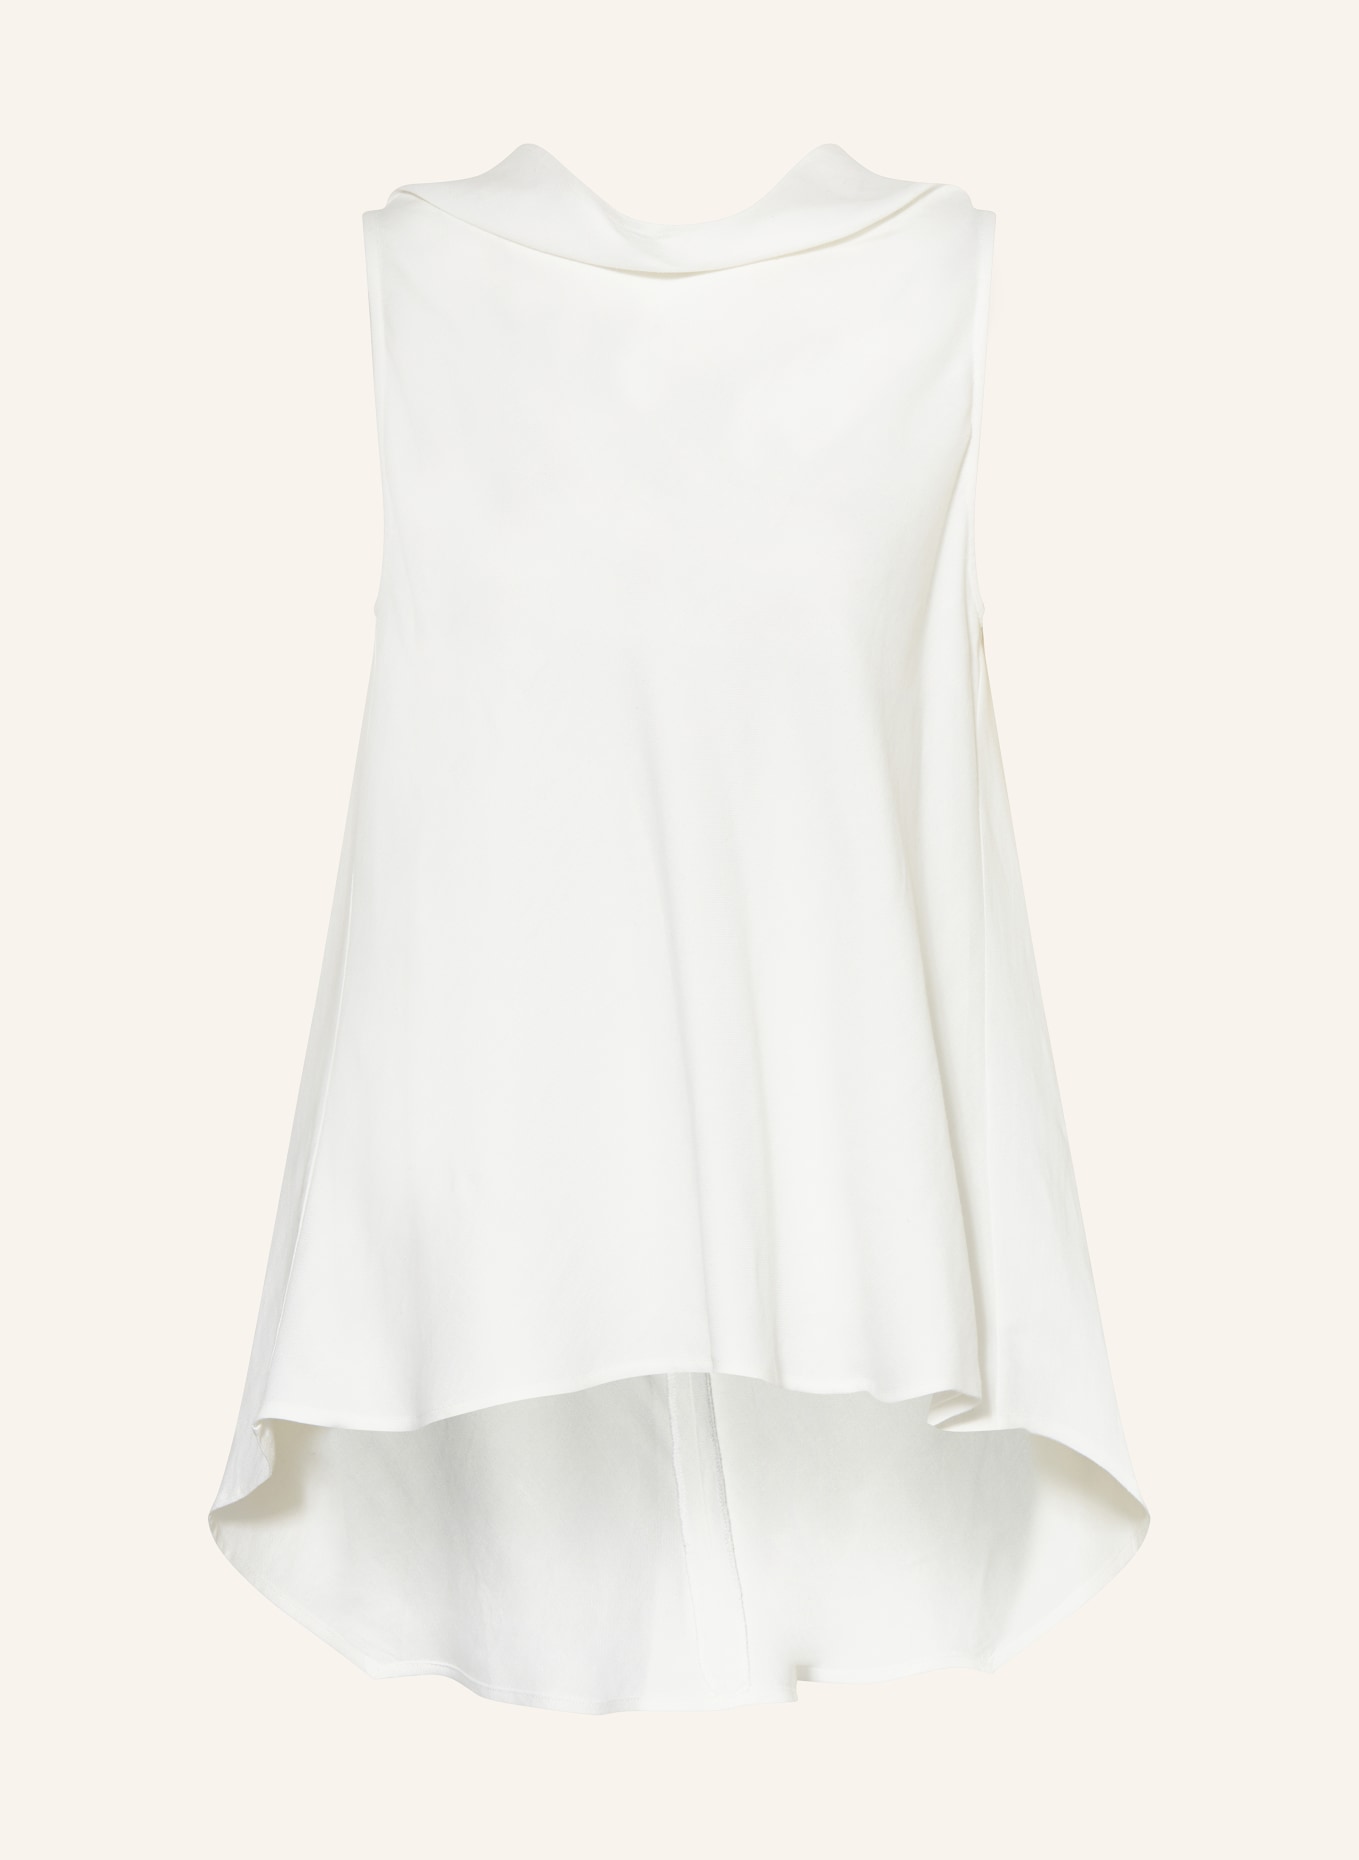 ANTONELLI firenze Blouse top AMADEUS, Color: WHITE (Image 1)